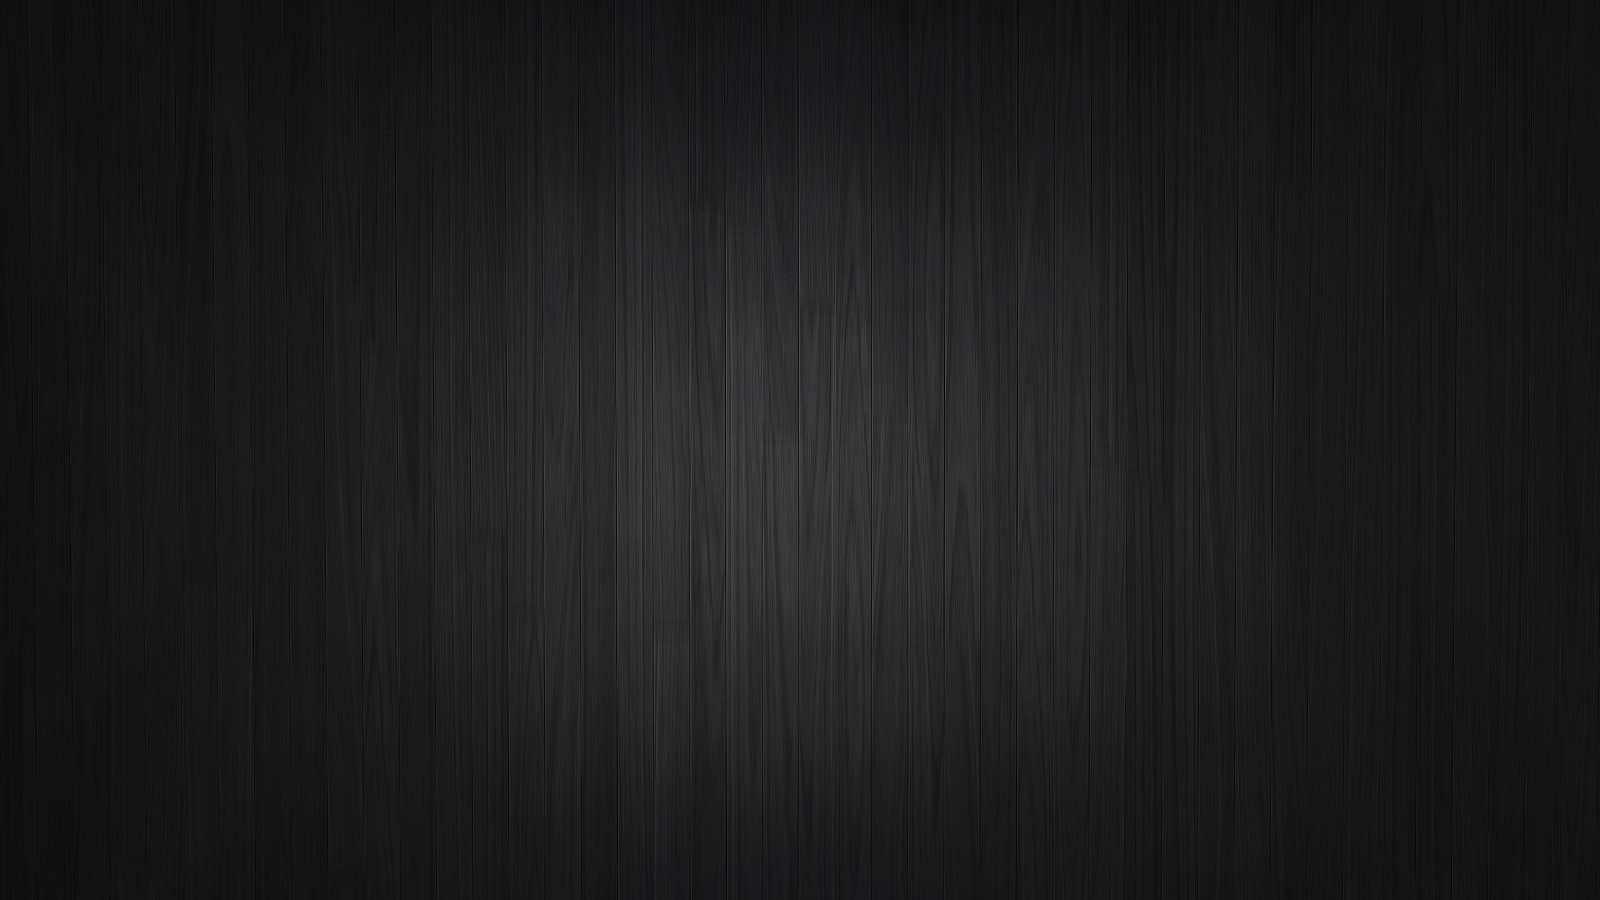 Free Download Black Dark Wallpaper 1600x900 Black Dark Wood Textures Wood 1600x900 For Your Desktop Mobile Tablet Explore 49 1600x900 Hd 16 9 Wallpapers Hd Wallpapers 1600x900 1600 X 900 Fall Wallpaper 16 9 Wallpapers